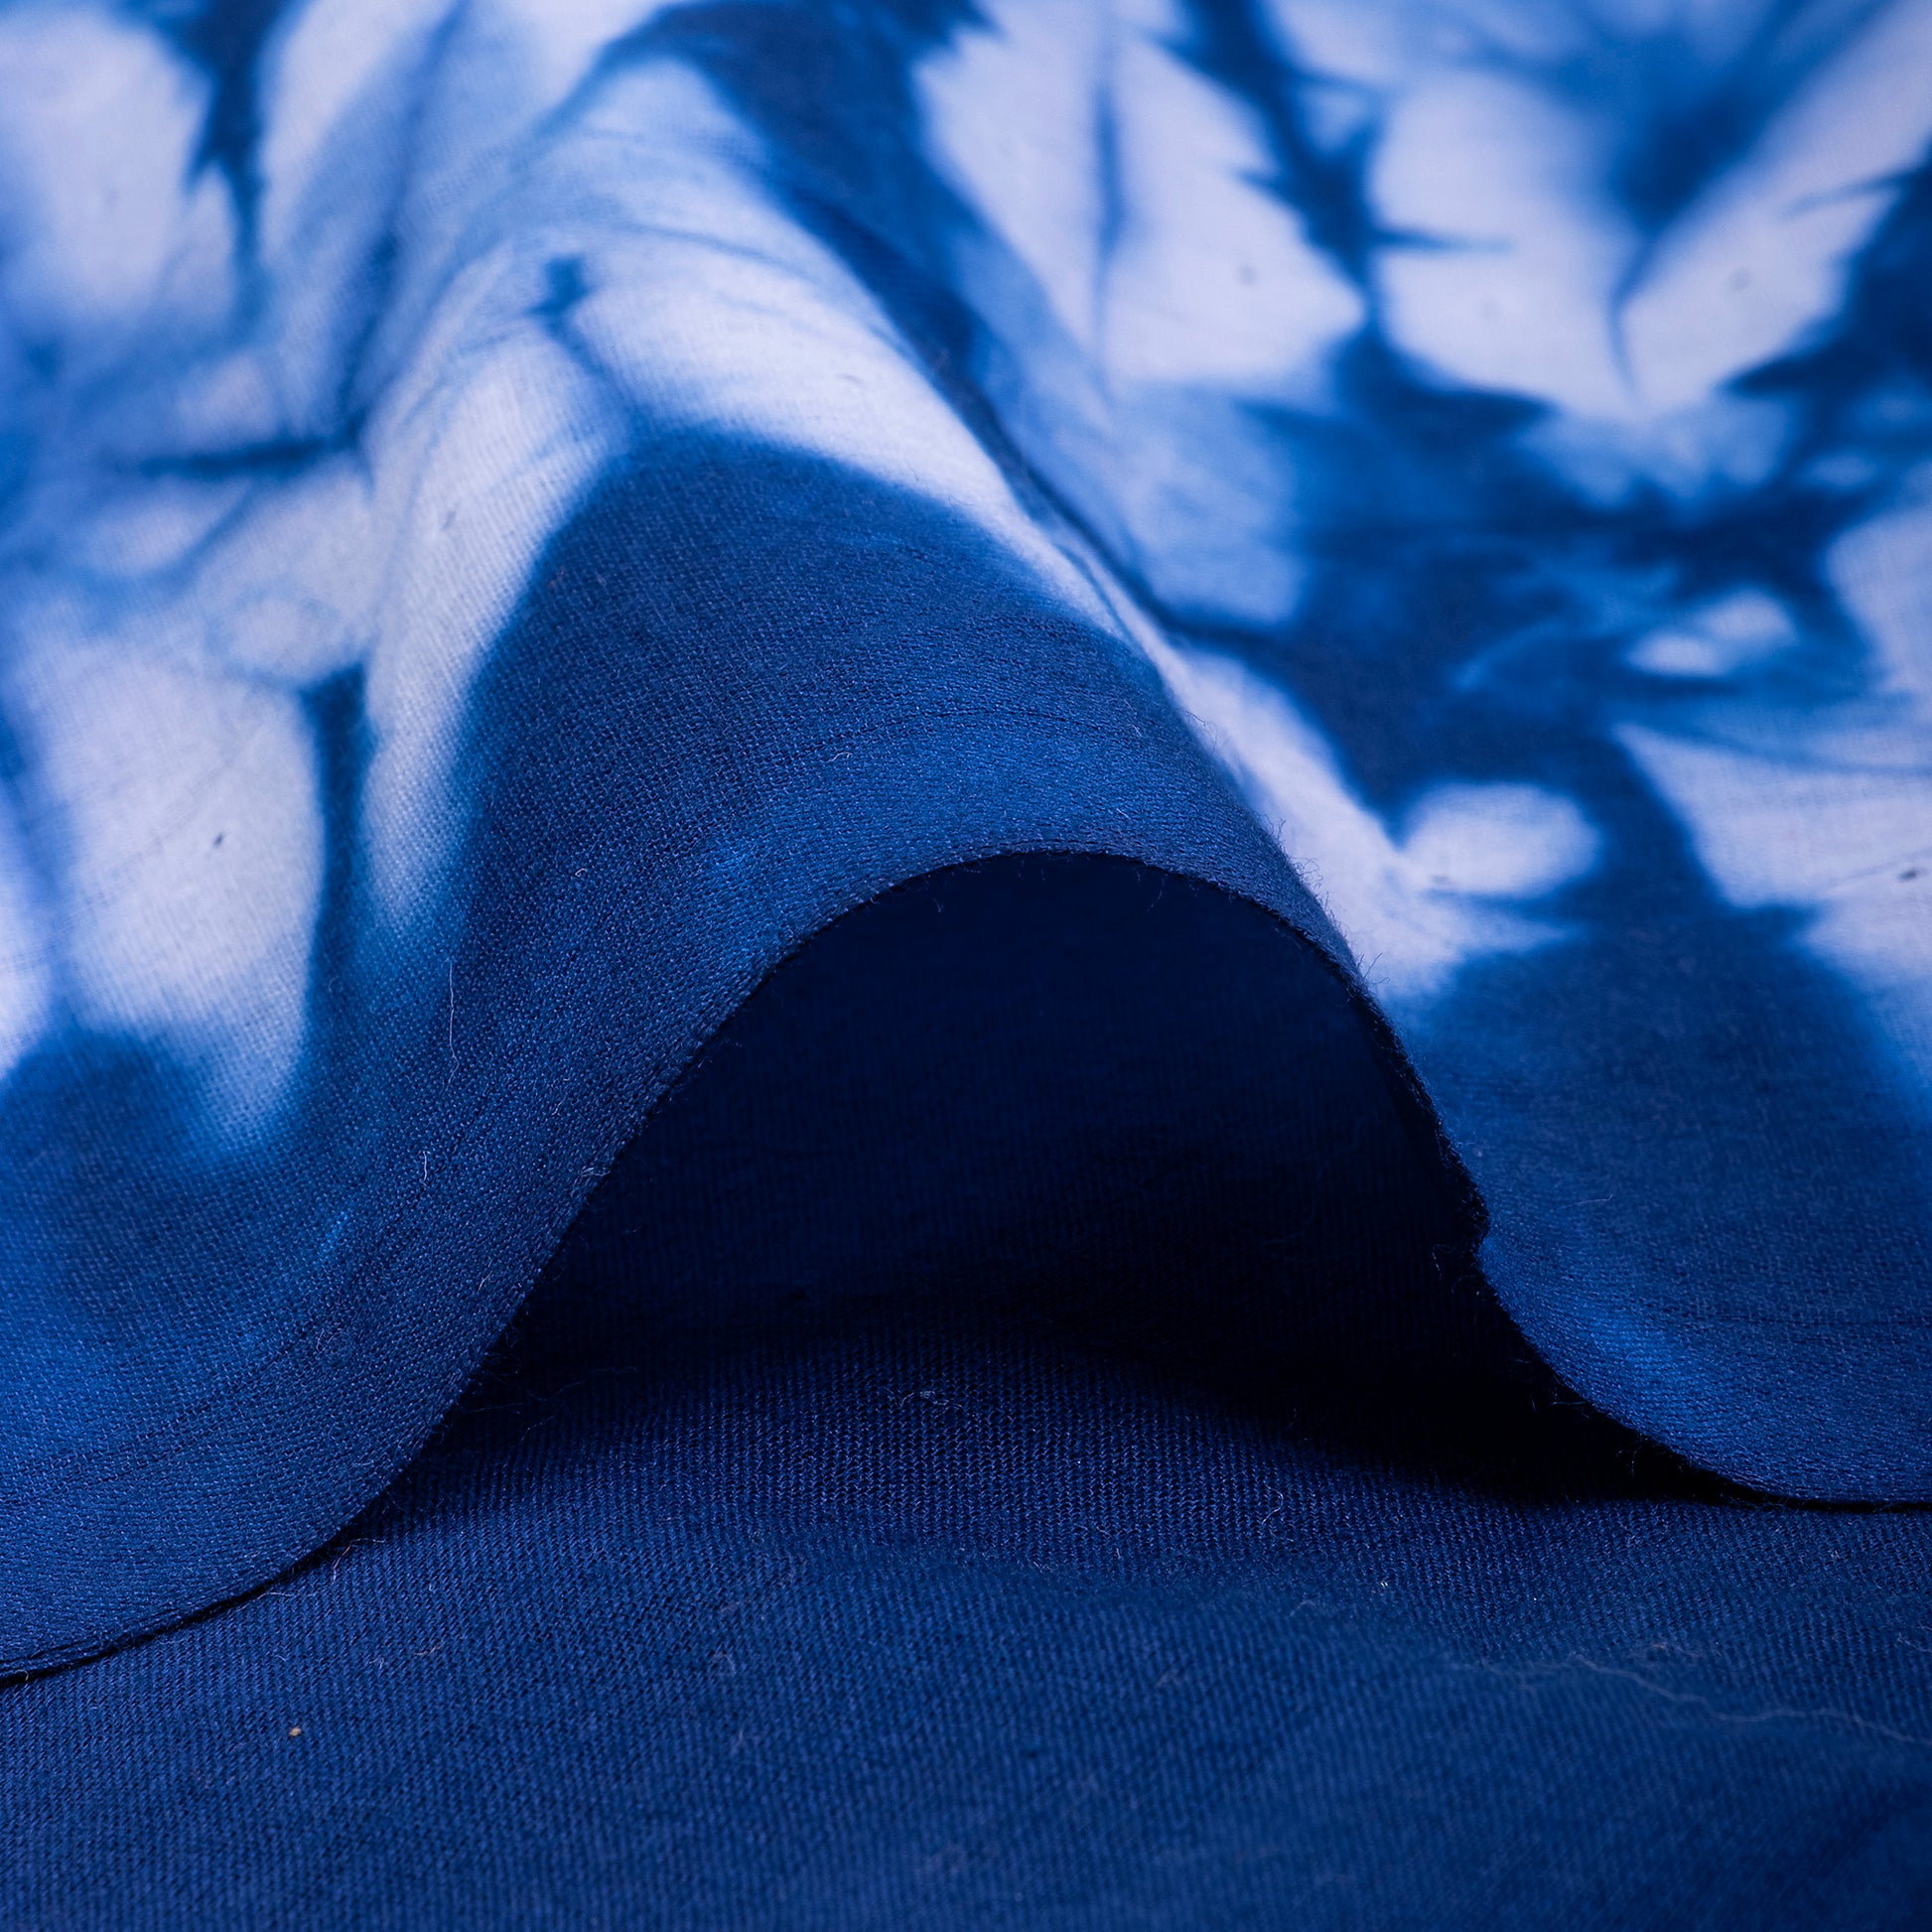 New Blue Tie Dye Soft Shibori Print Cotton Fabric